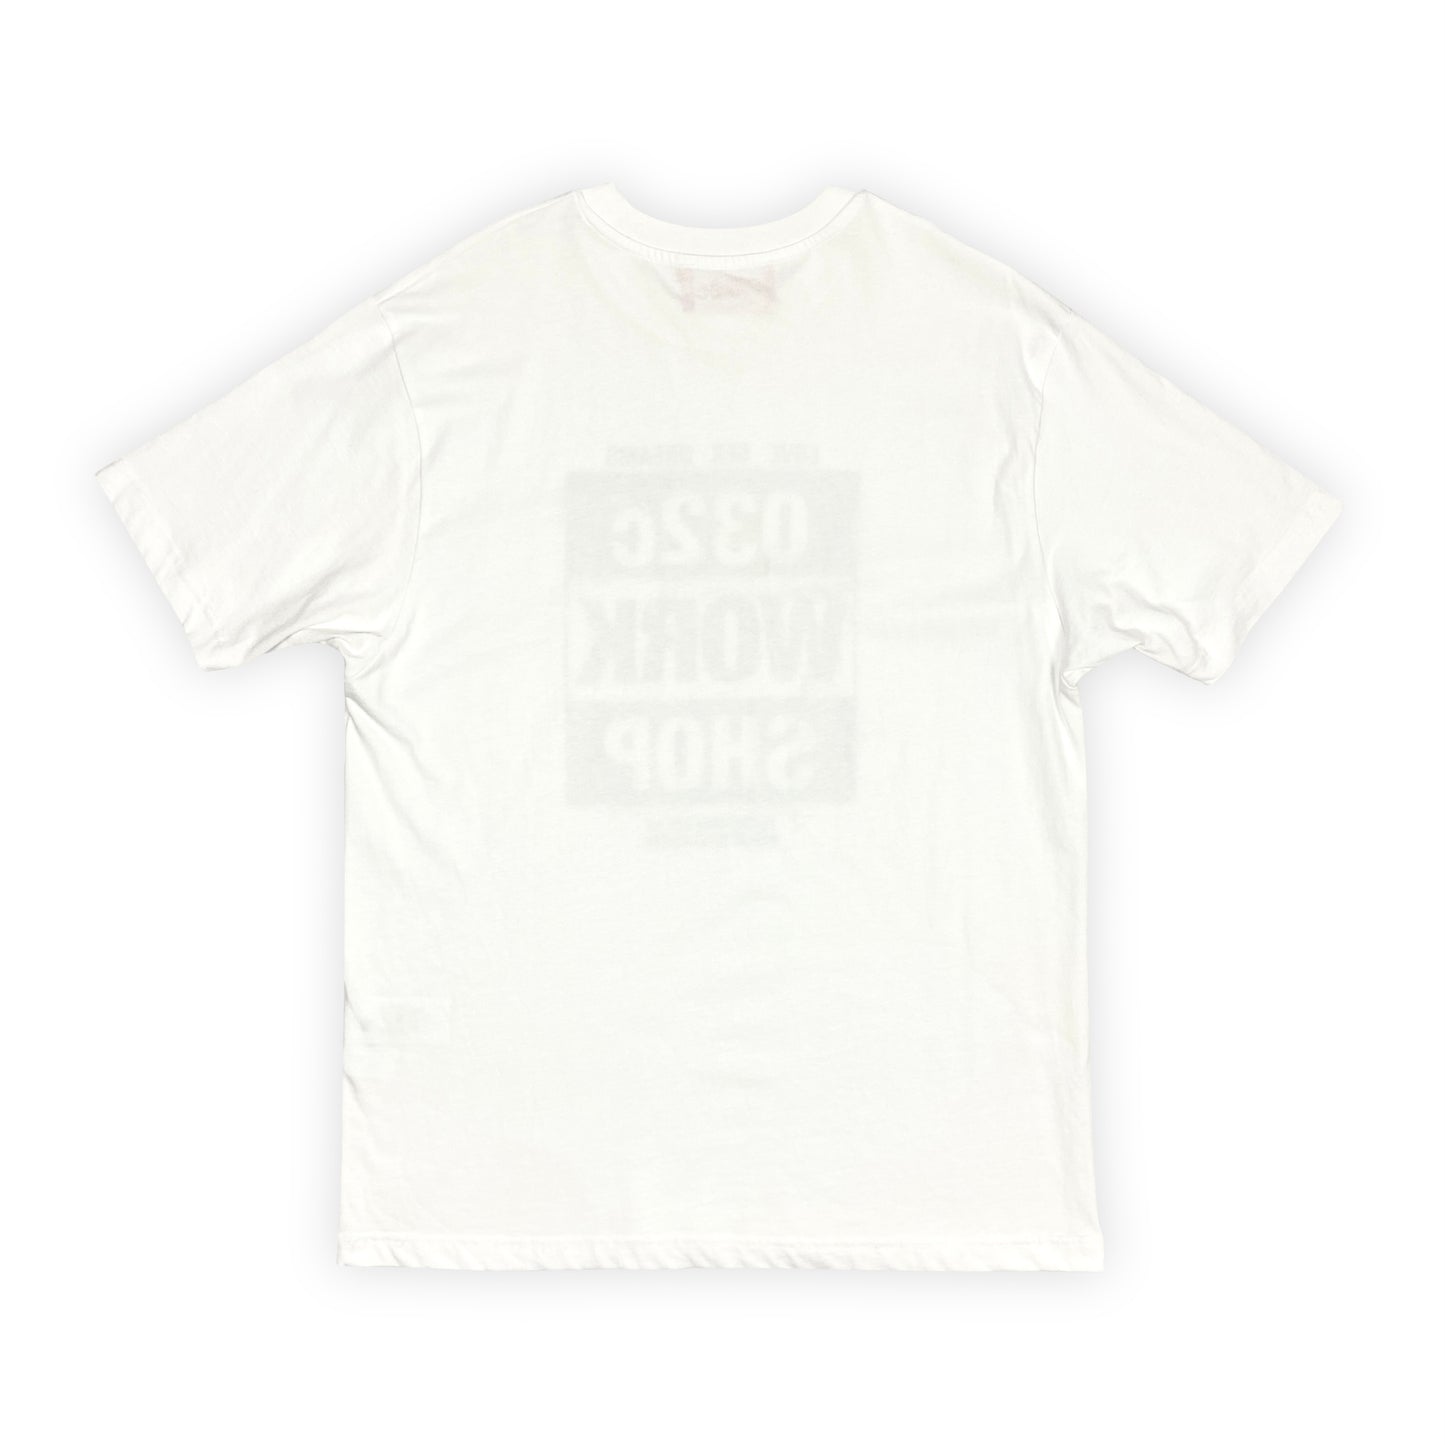 032c LSD workshop shirt